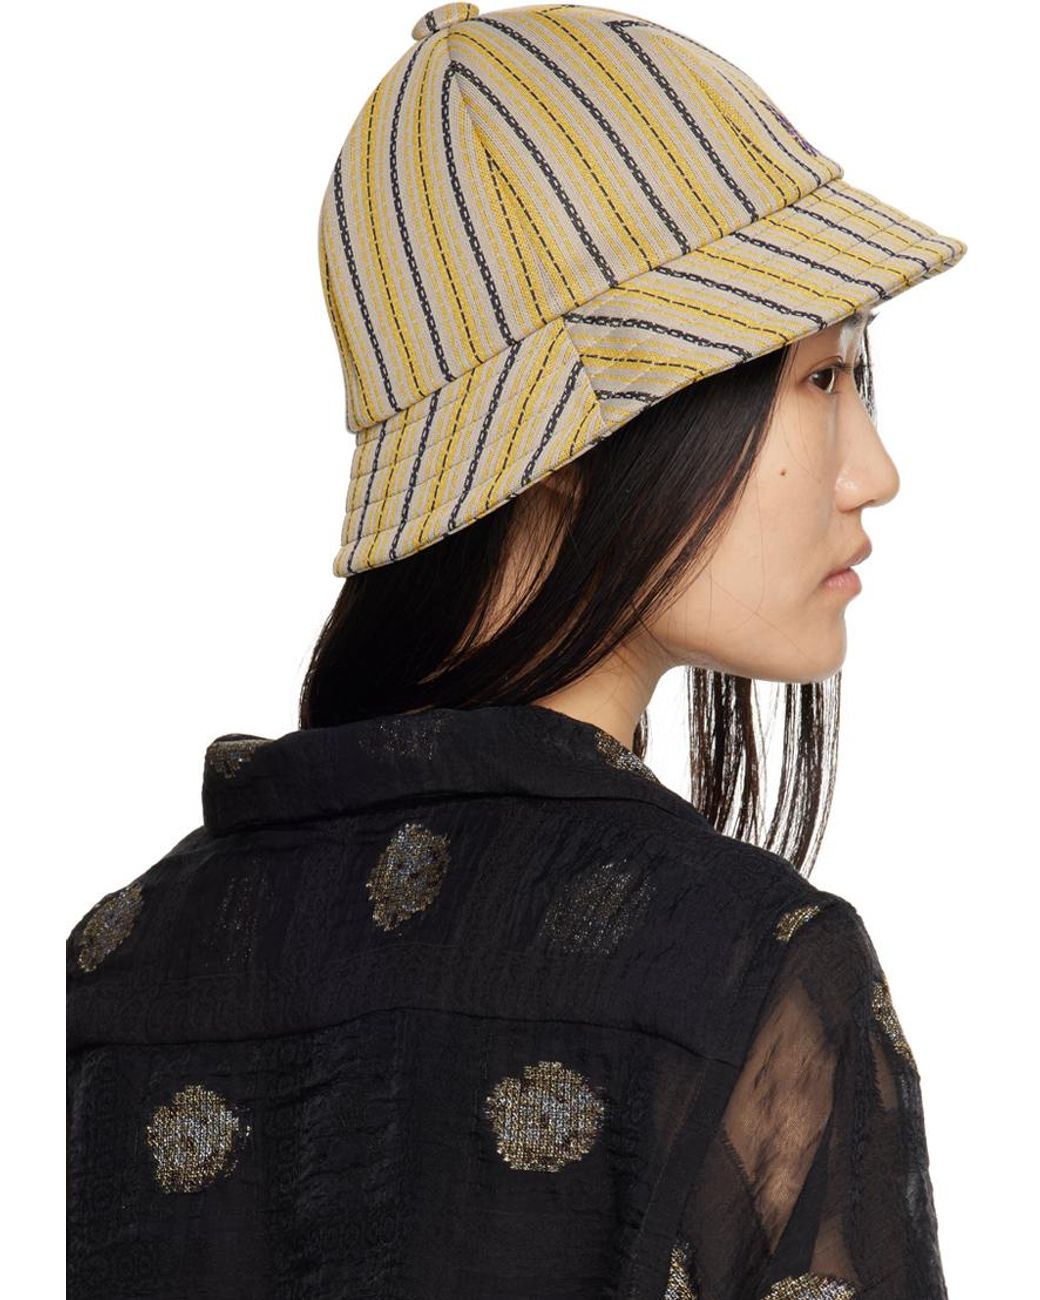 NEEDLES / Bermuda Hat Jacquard ハット 帽子 メンズ 春新作の